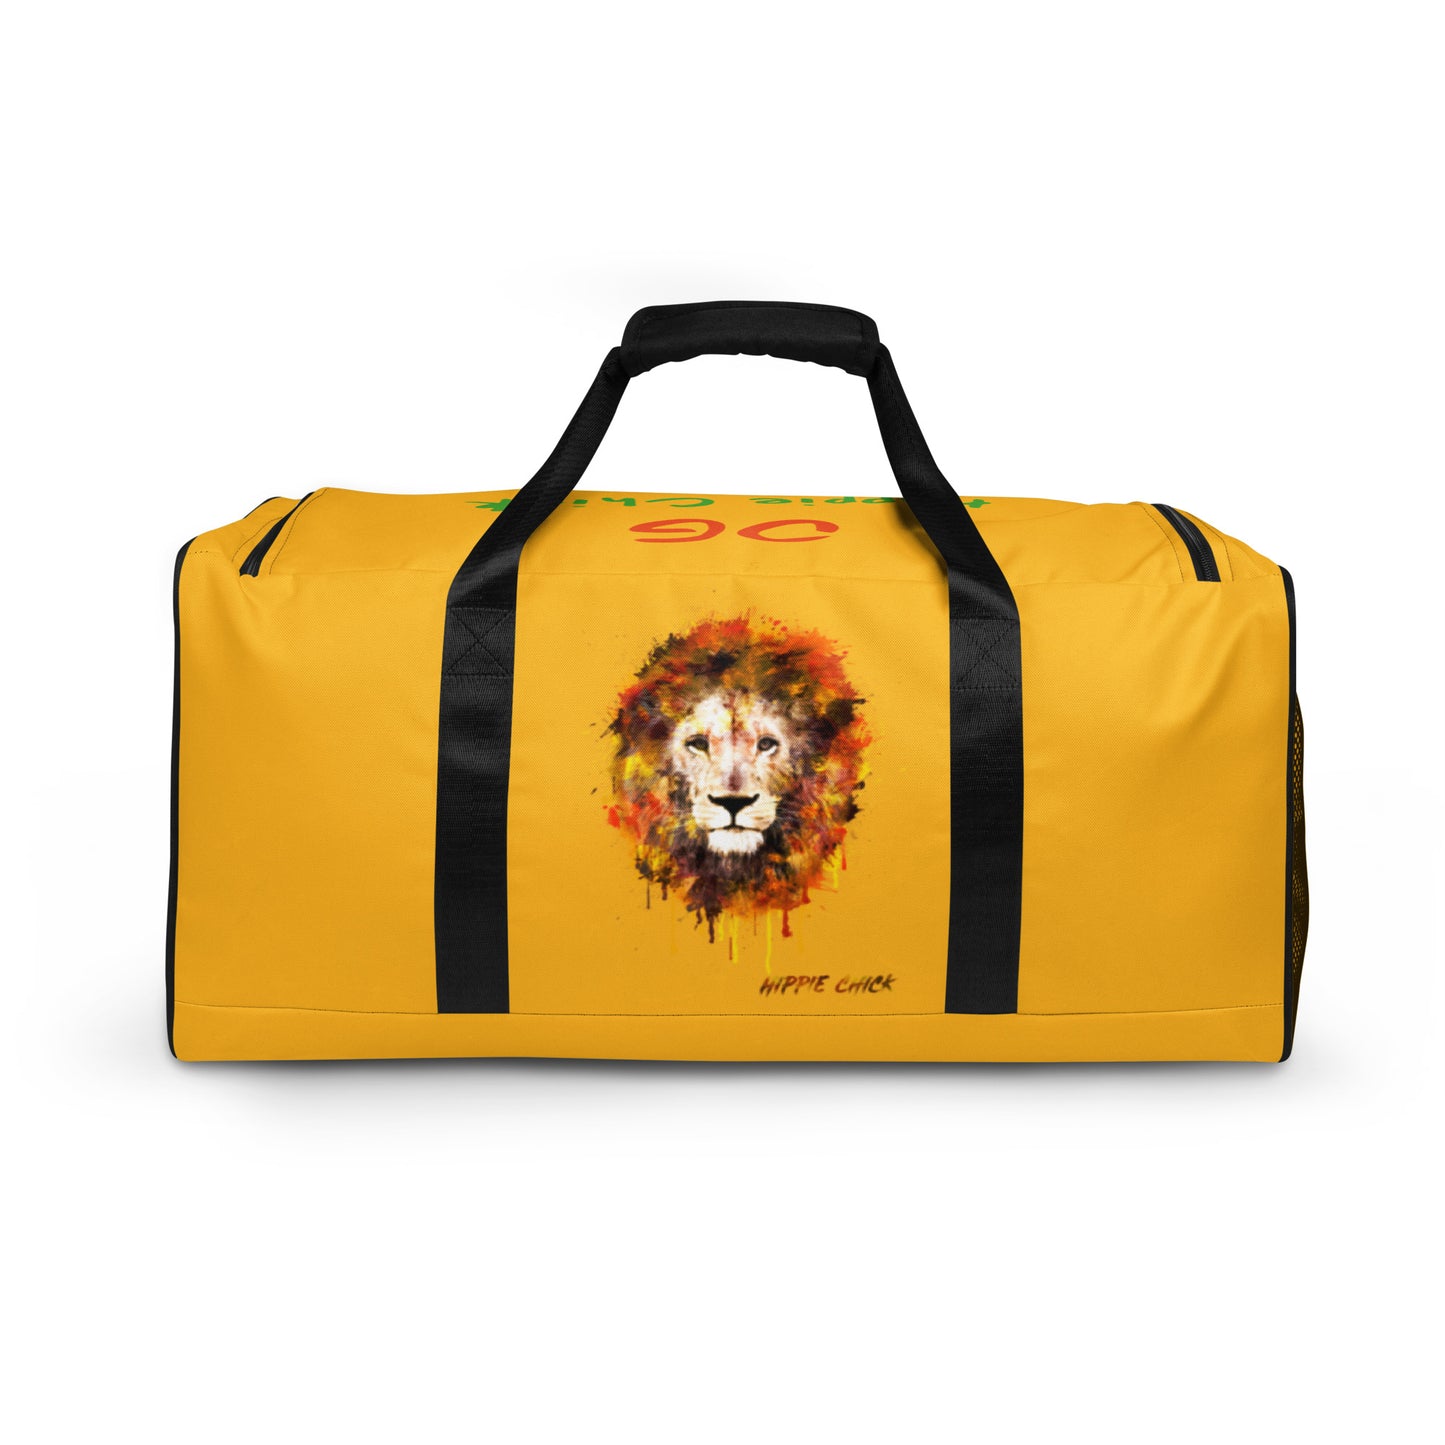 Yellow Duffle Bag - OG Hippie Chick